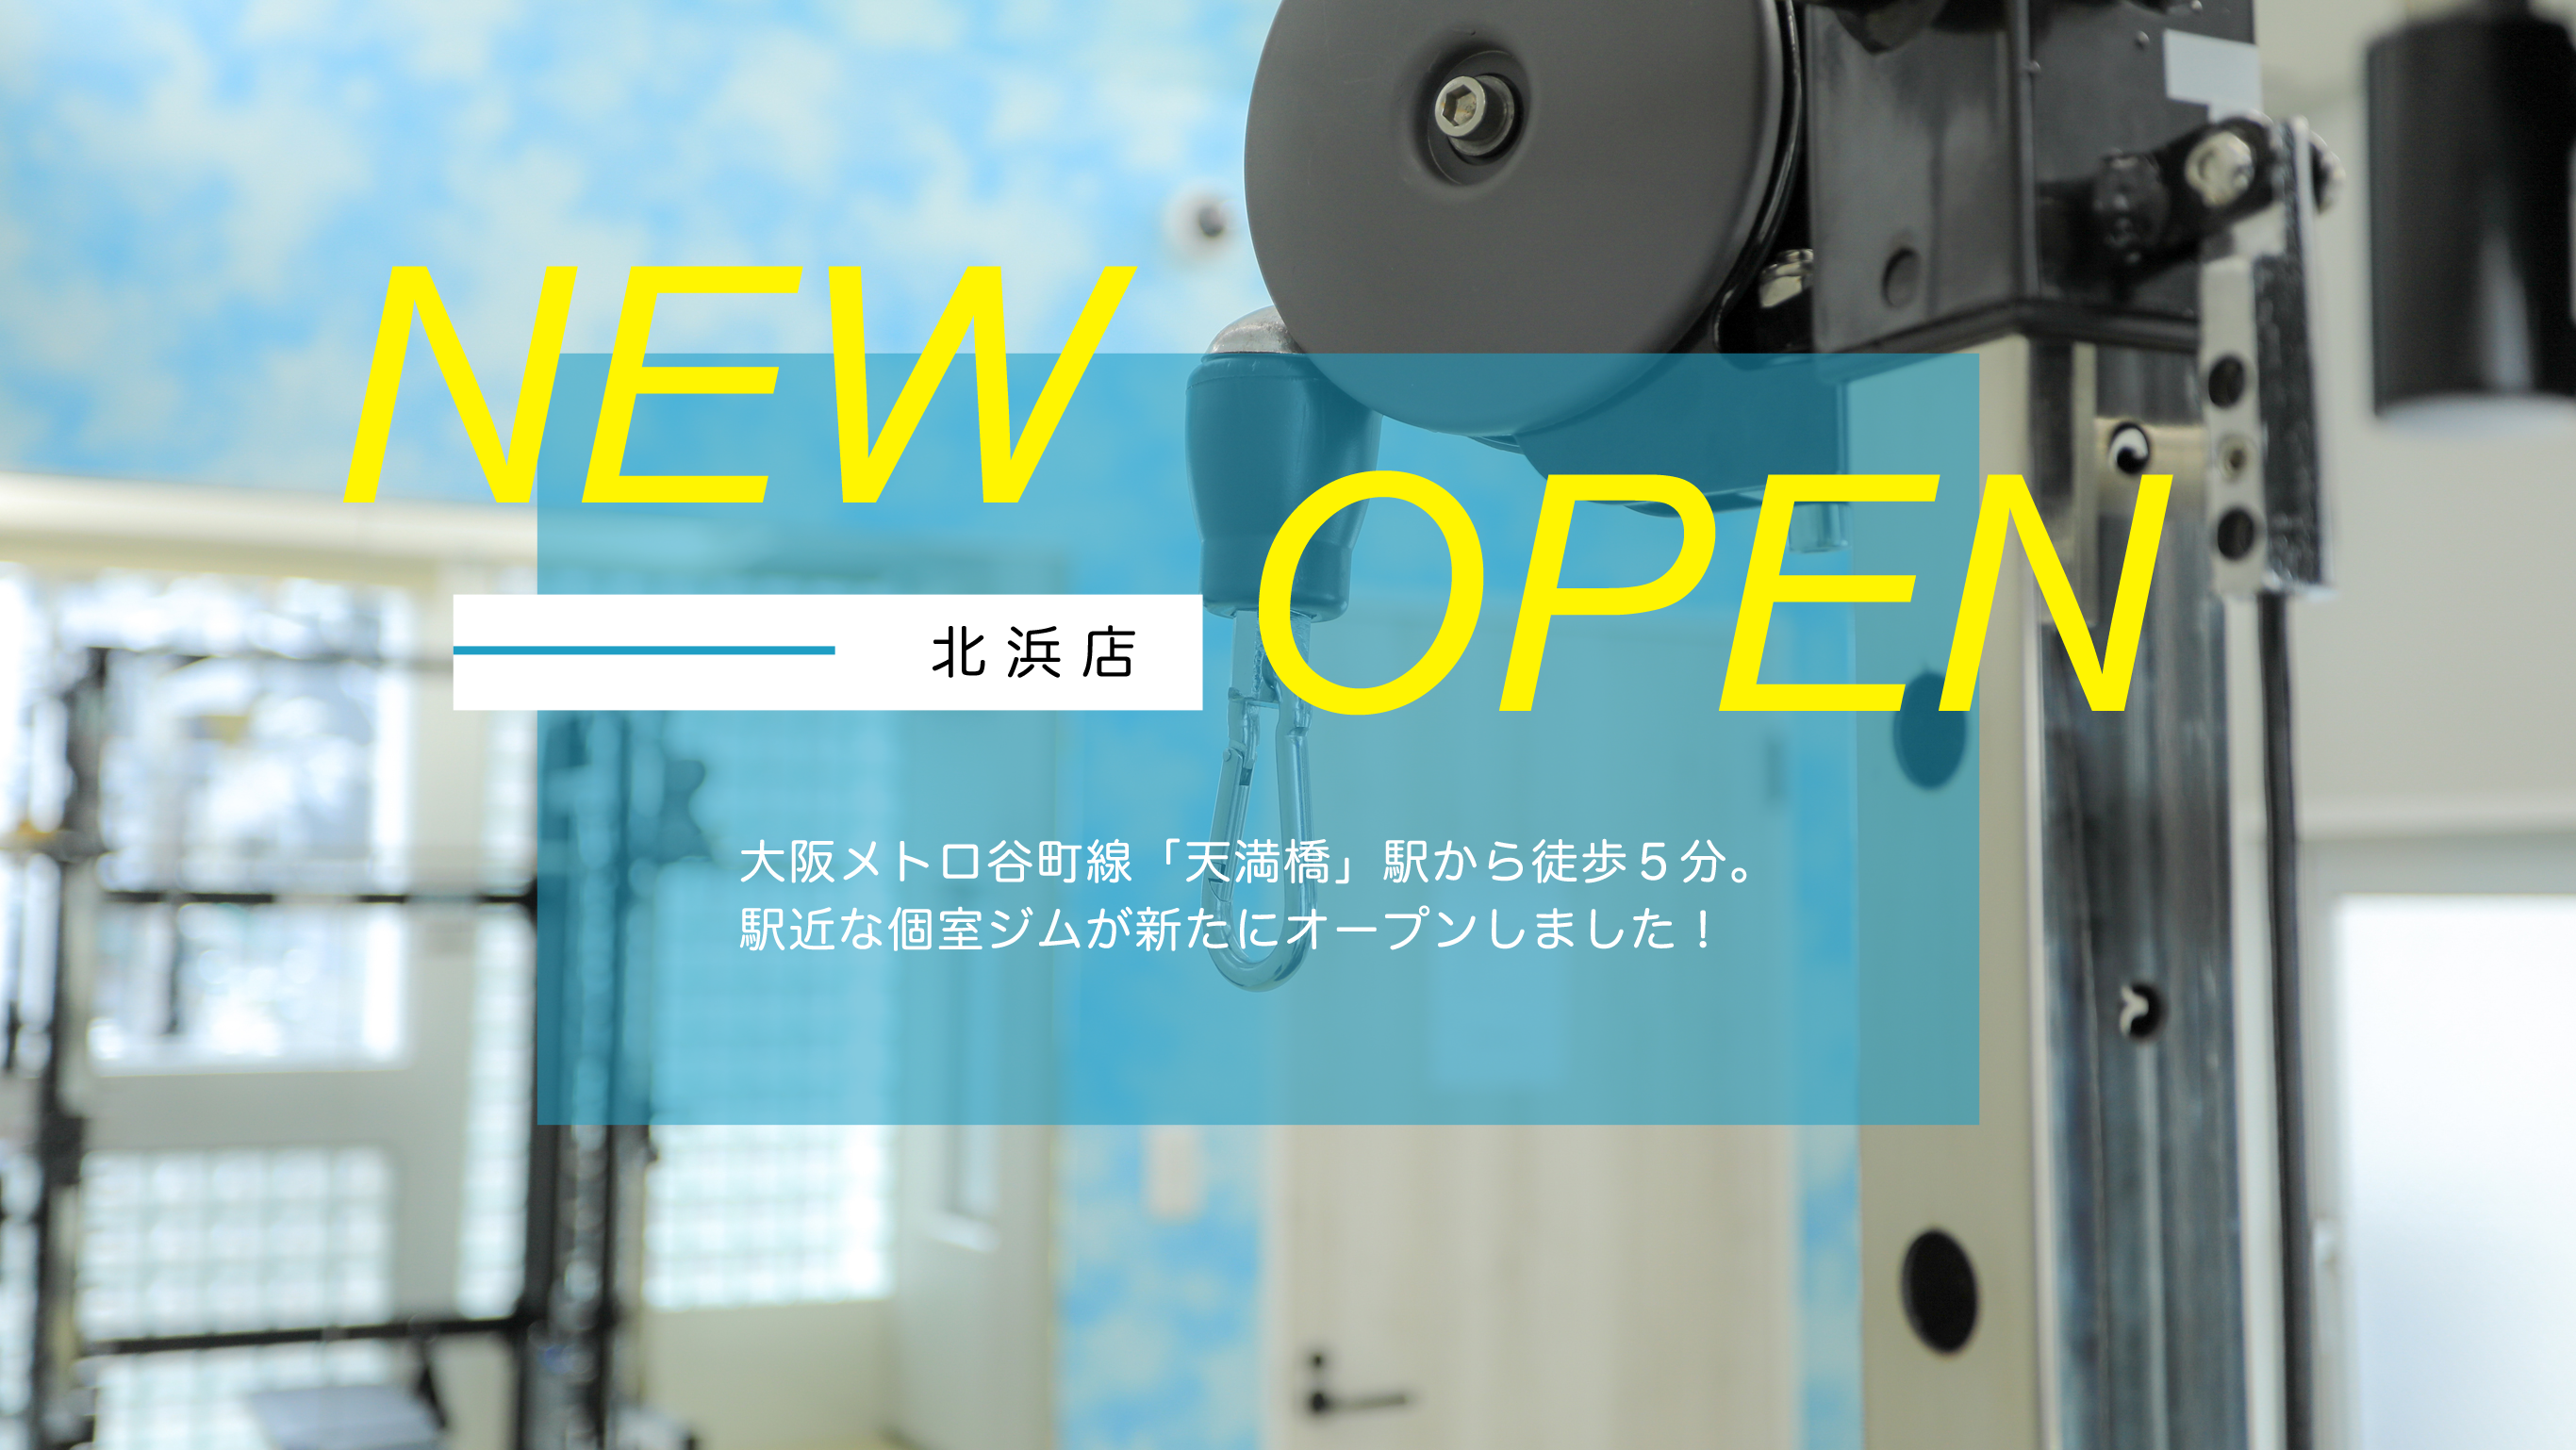 NEW OPEN 天満橋店 大阪メトロ谷町線「天満橋」駅から徒歩5分！<br>駅近な個室ジムが天満橋に新たにオープンしました。